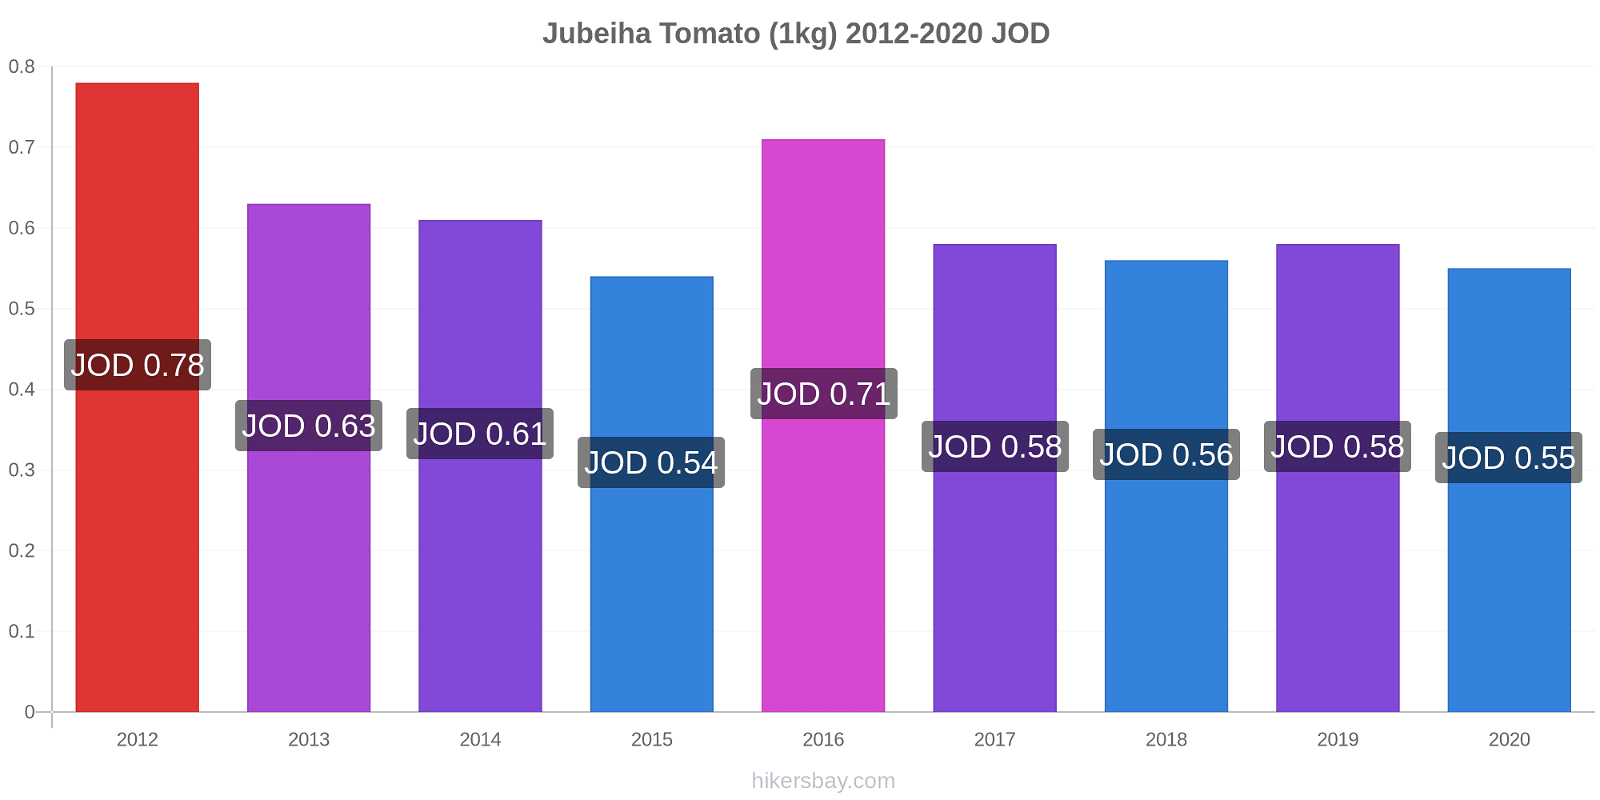 Jubeiha price changes Tomato (1kg) hikersbay.com